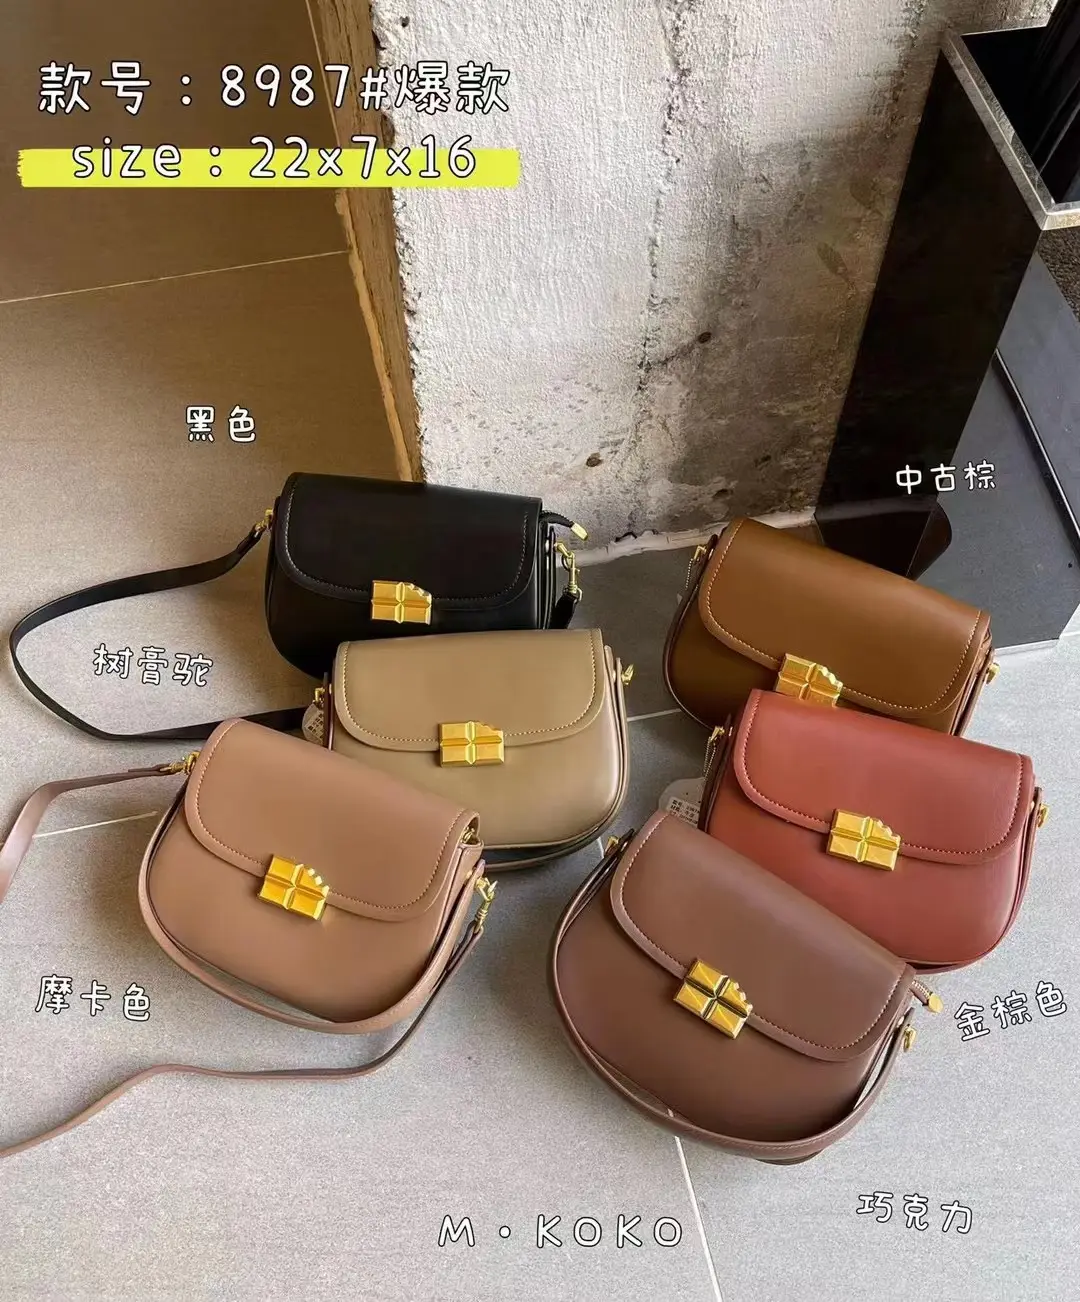 We have all designer items new famous brand bags designer purses and ladies hand bags luxury designer inspired handbags women